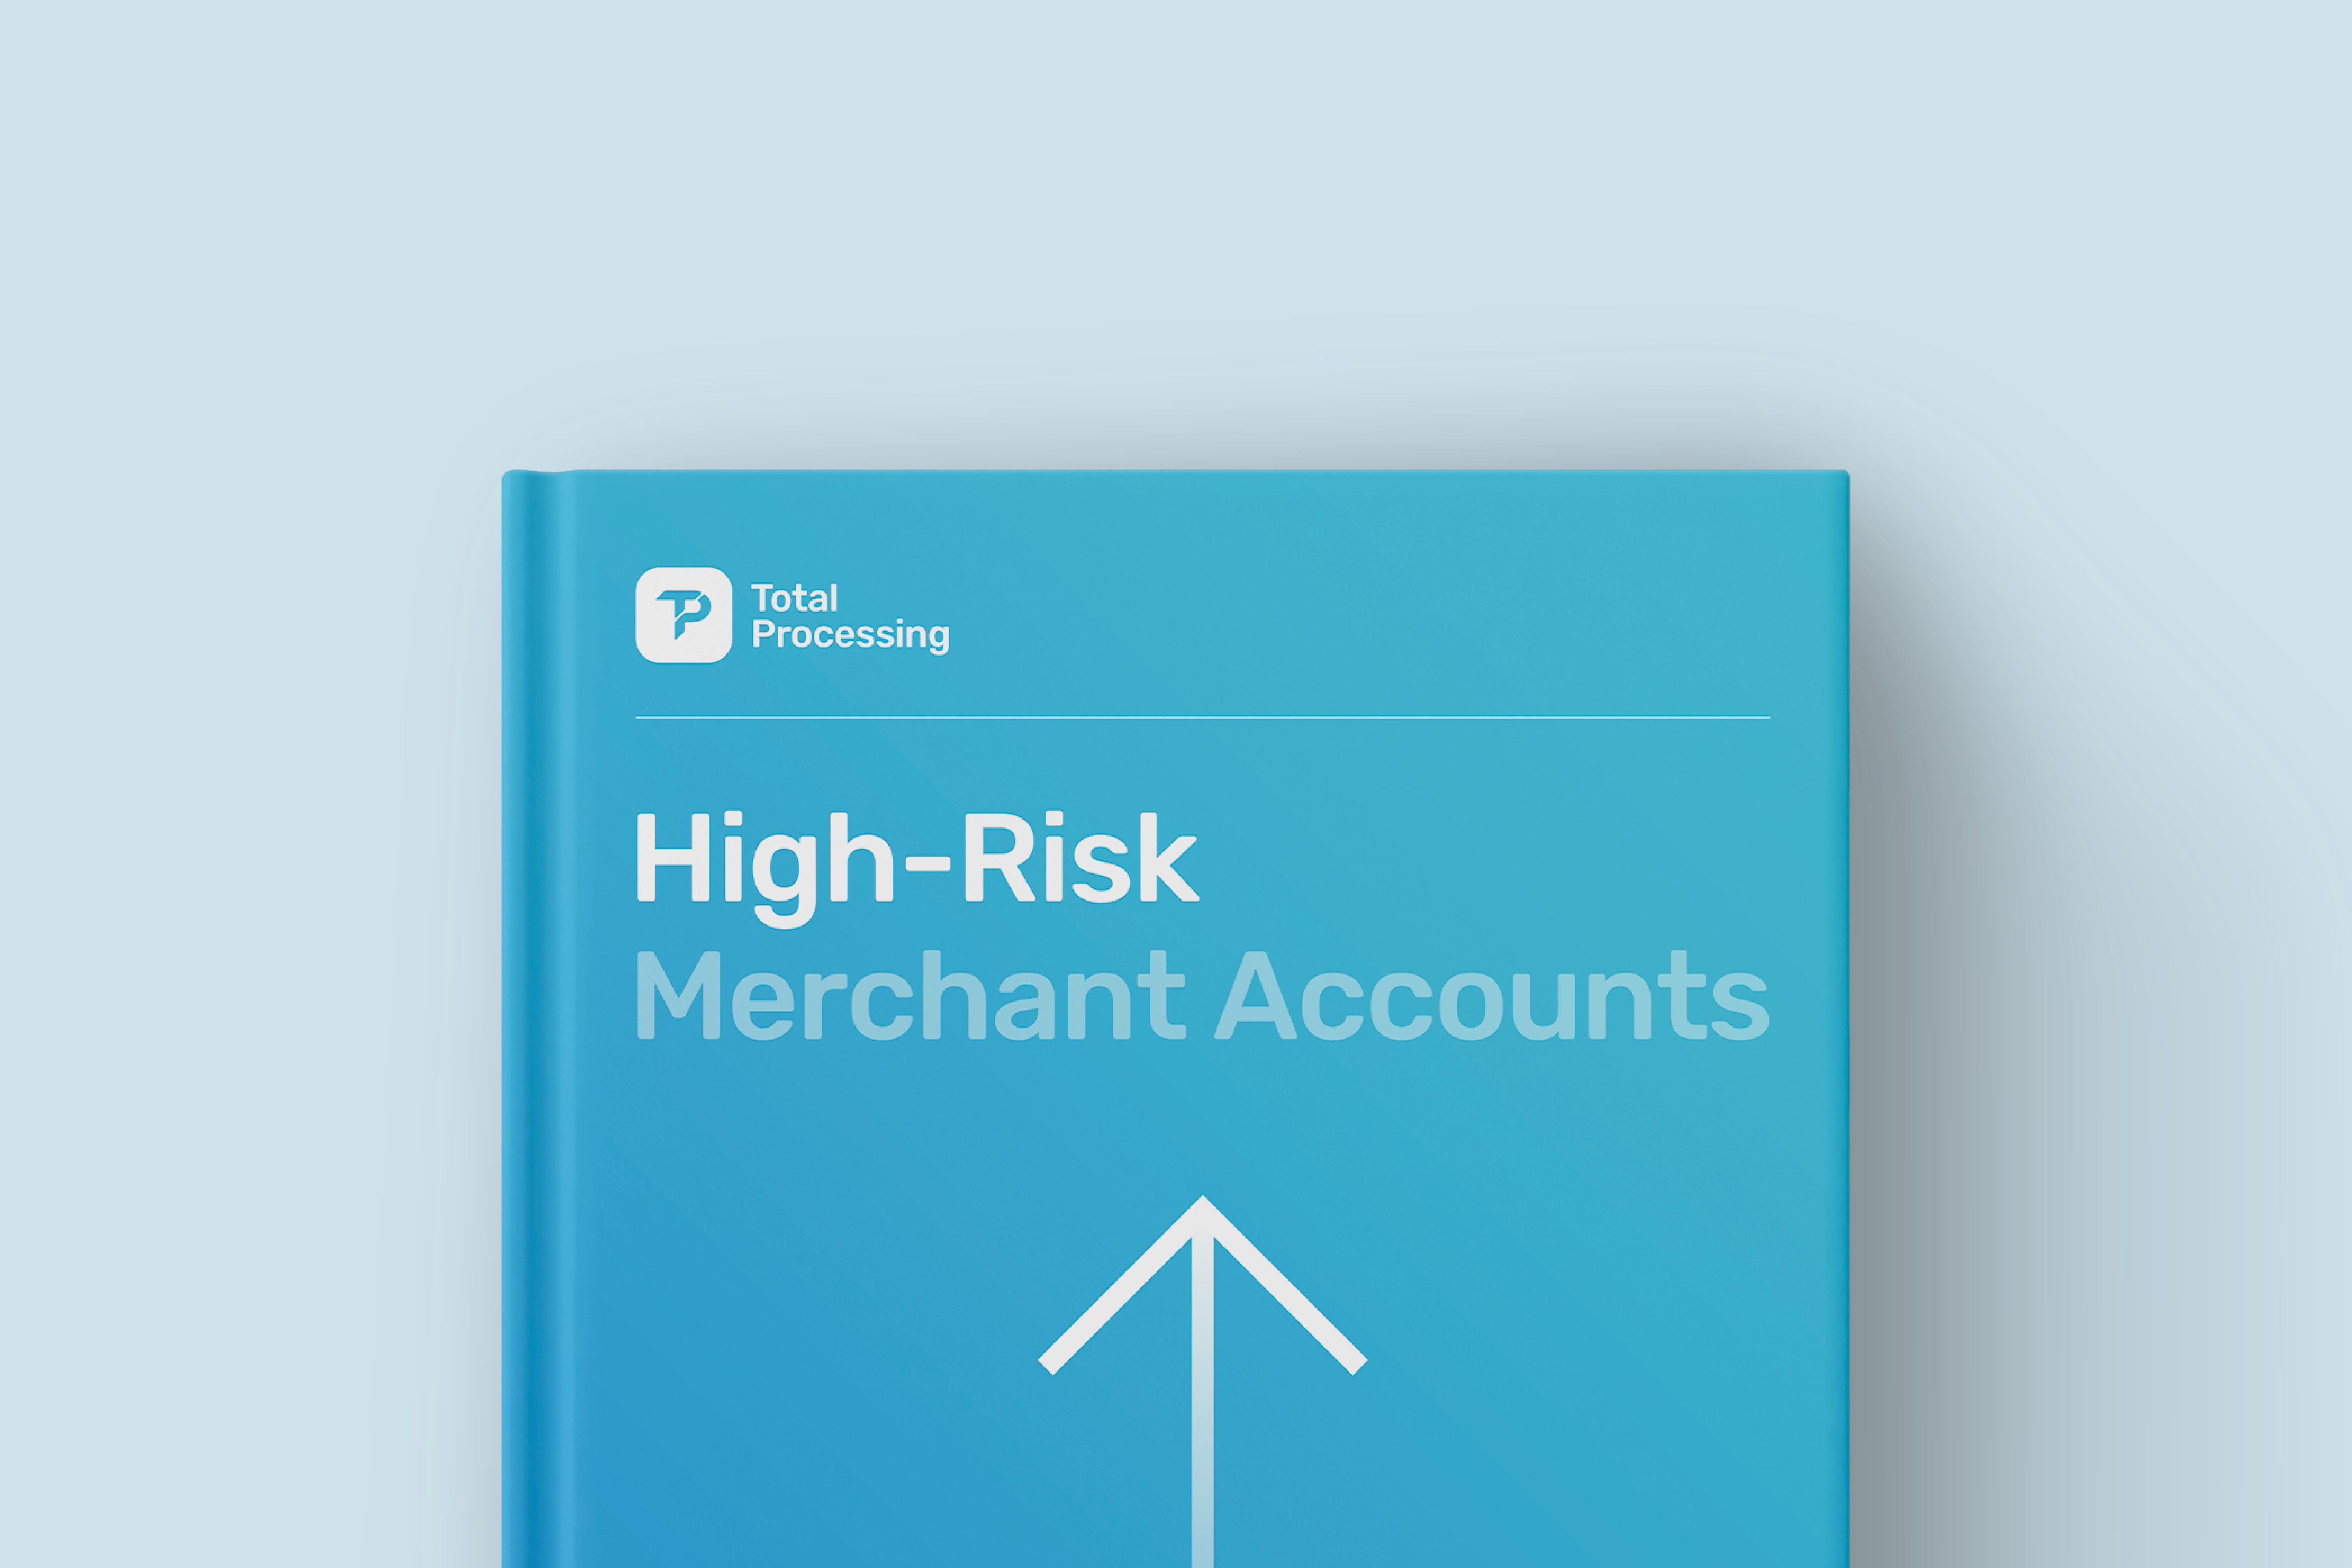 Maximising Merchant Accounts in High-Risk Industries